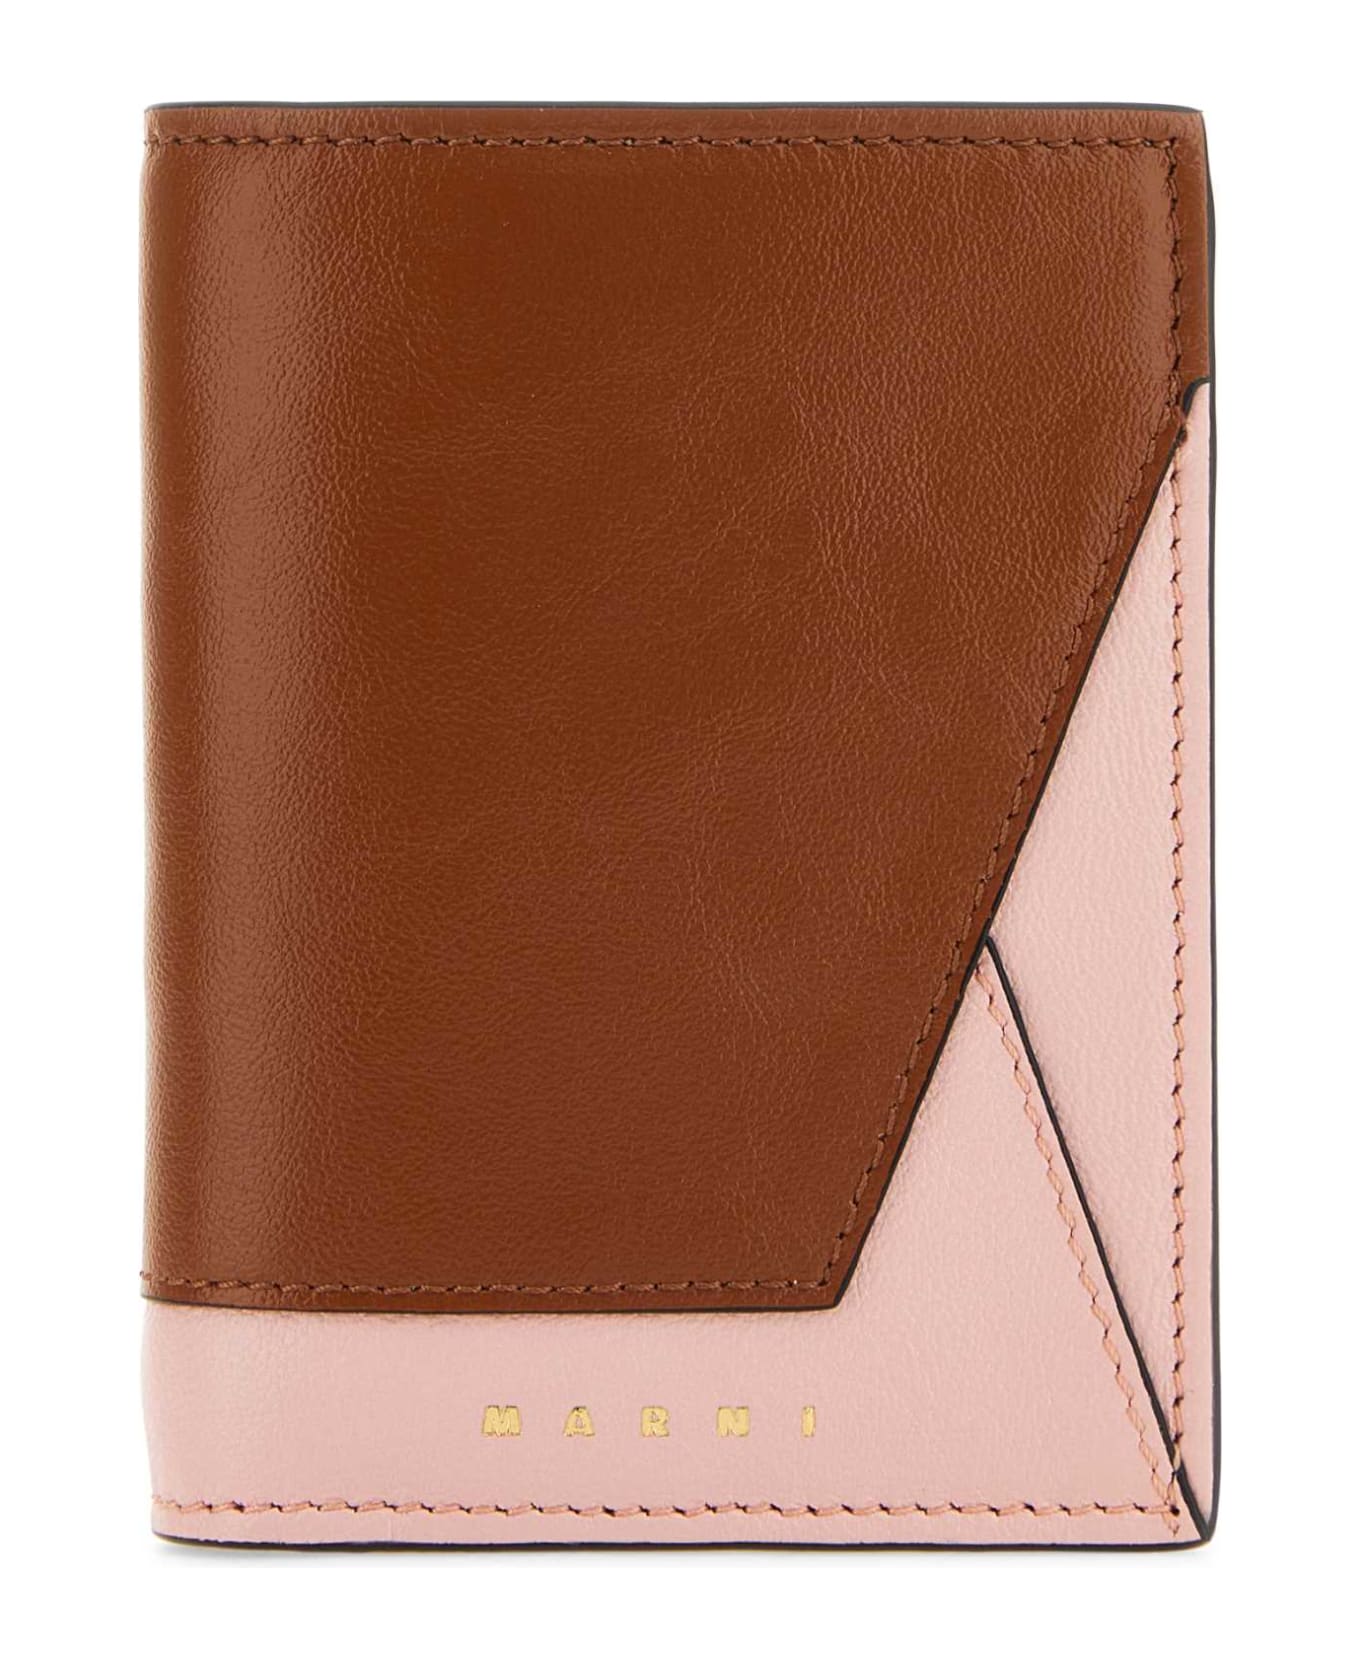 Marni Two-tone Leather Wallet - ZO670 財布